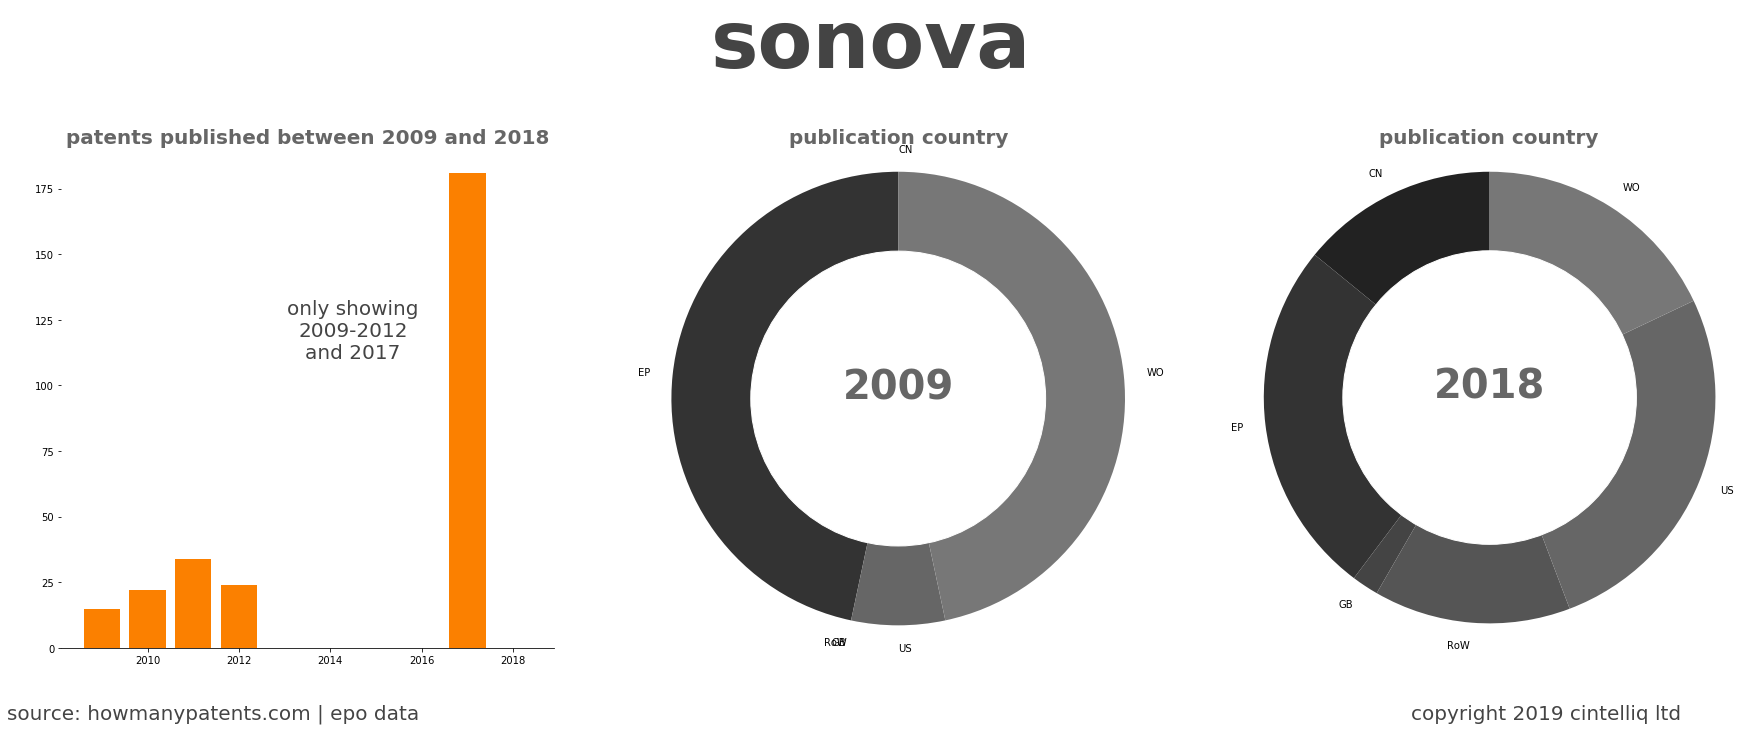 summary of patents for Sonova